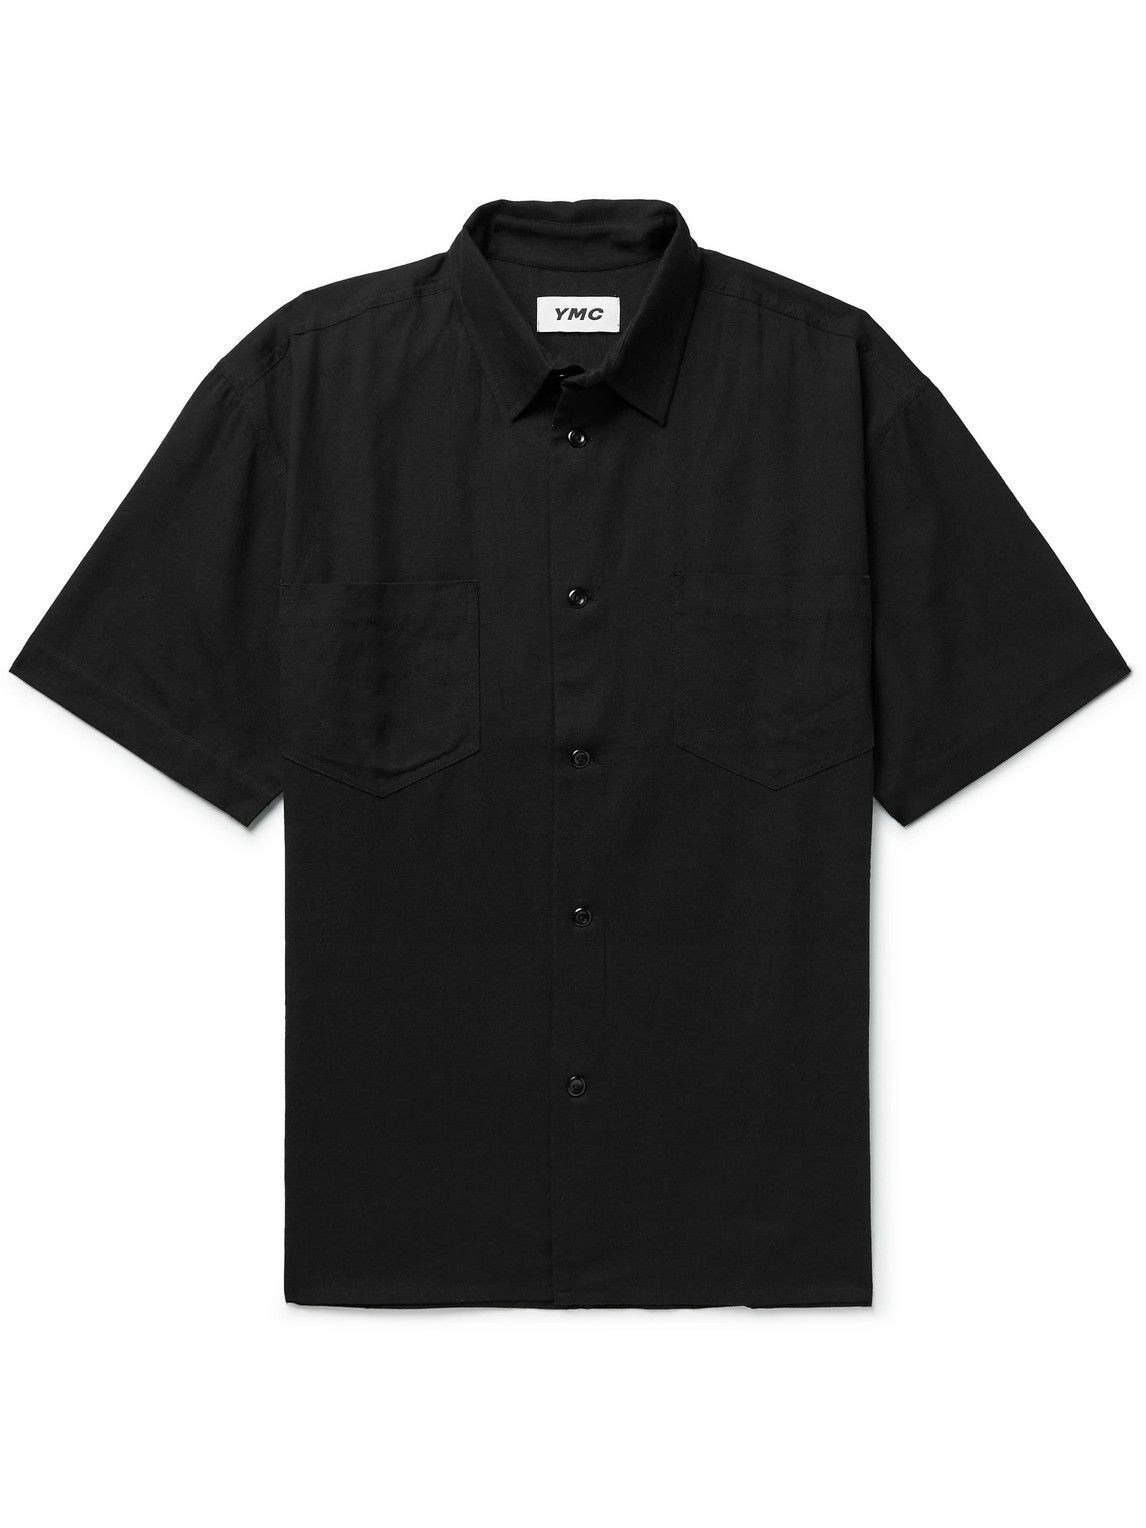 YMC - Mitchum Appliquéd Cotton Shirt - Black YMC